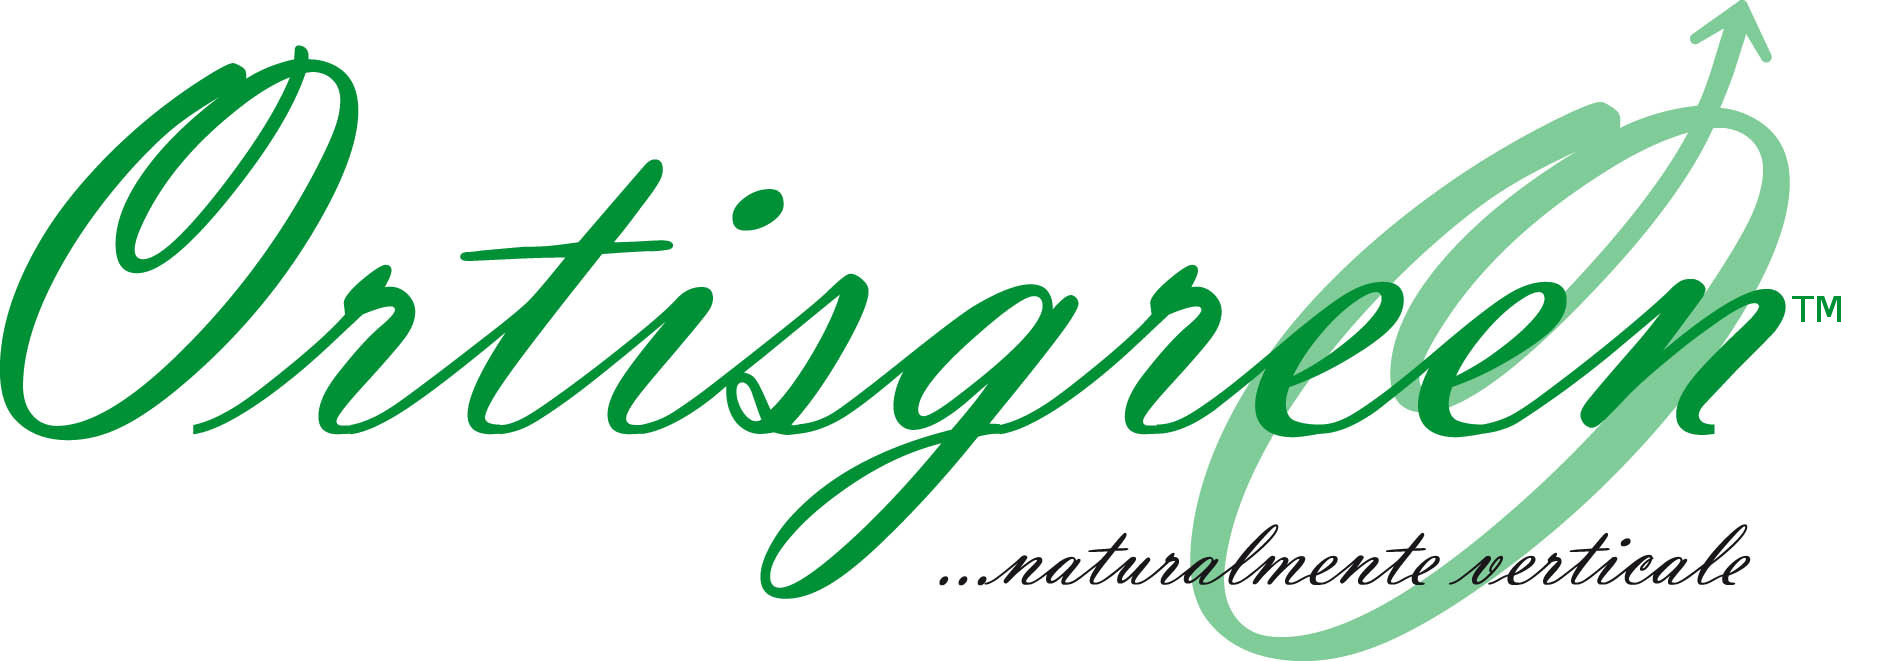 logo-ortisgreen-jpegTM